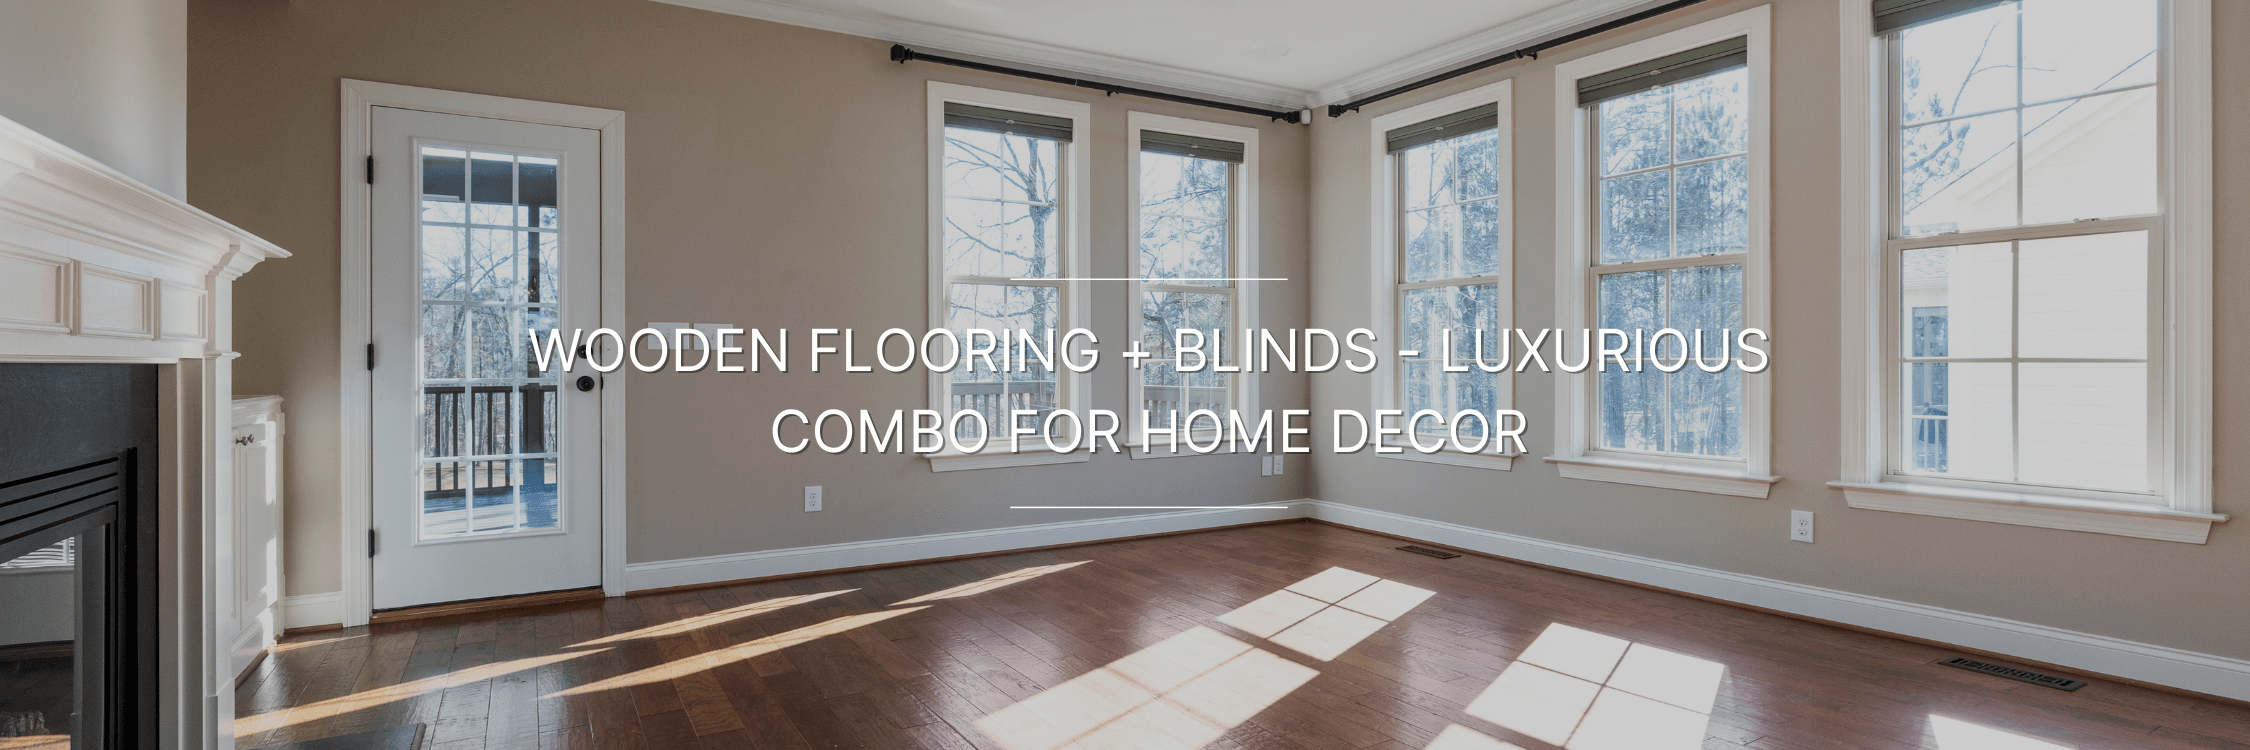 Wooden flooring + blinds image by Vista